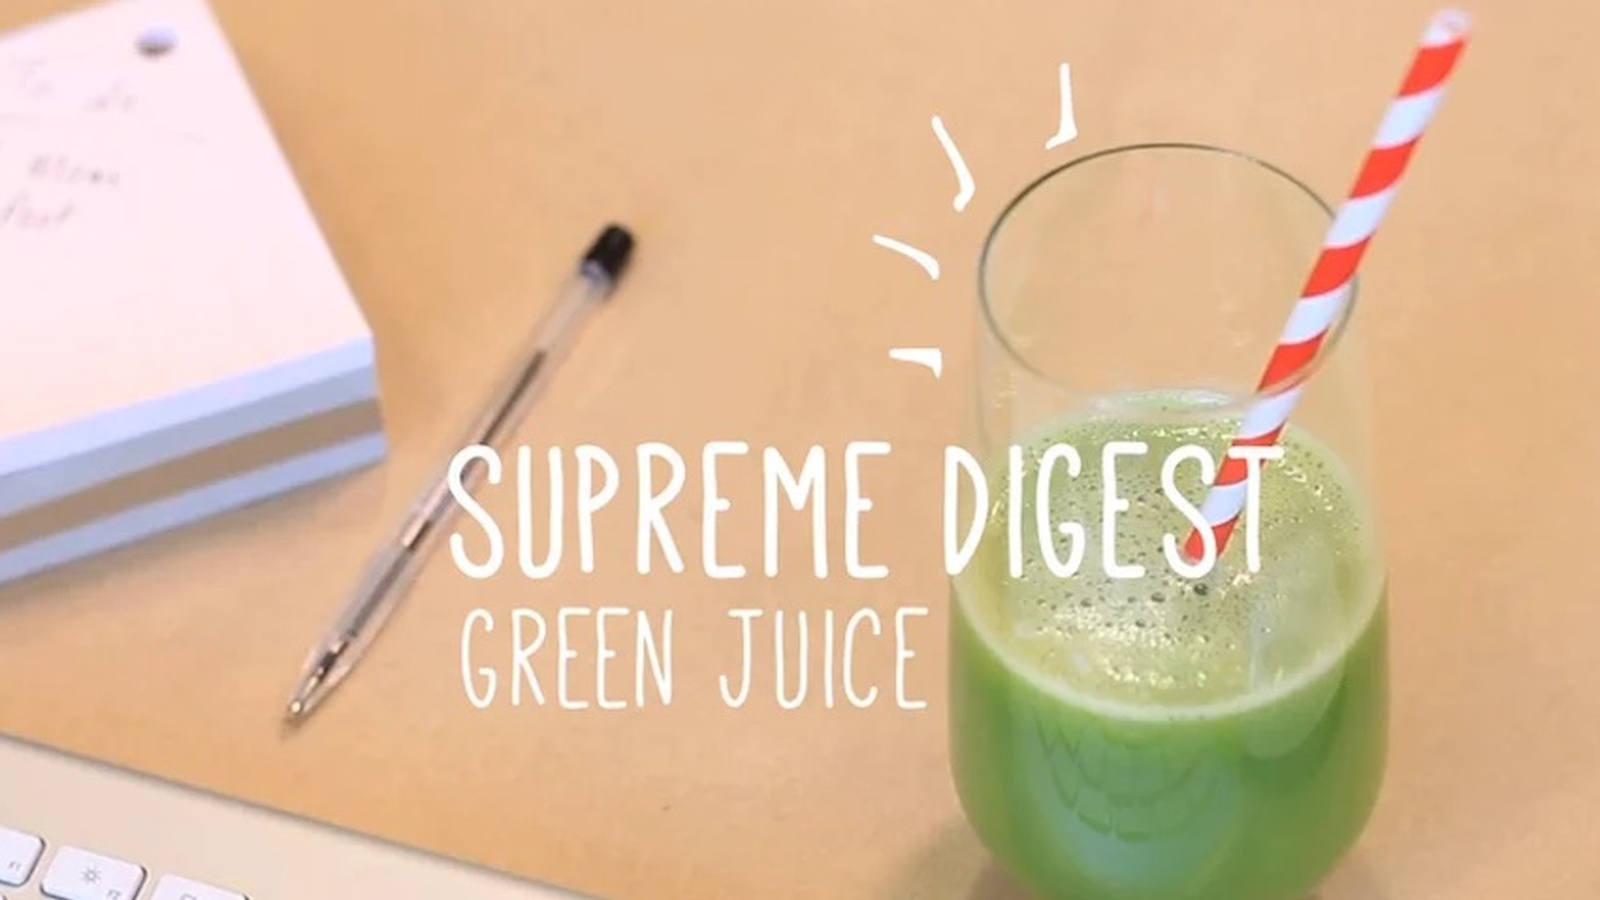 Supreme Digest Green Juice